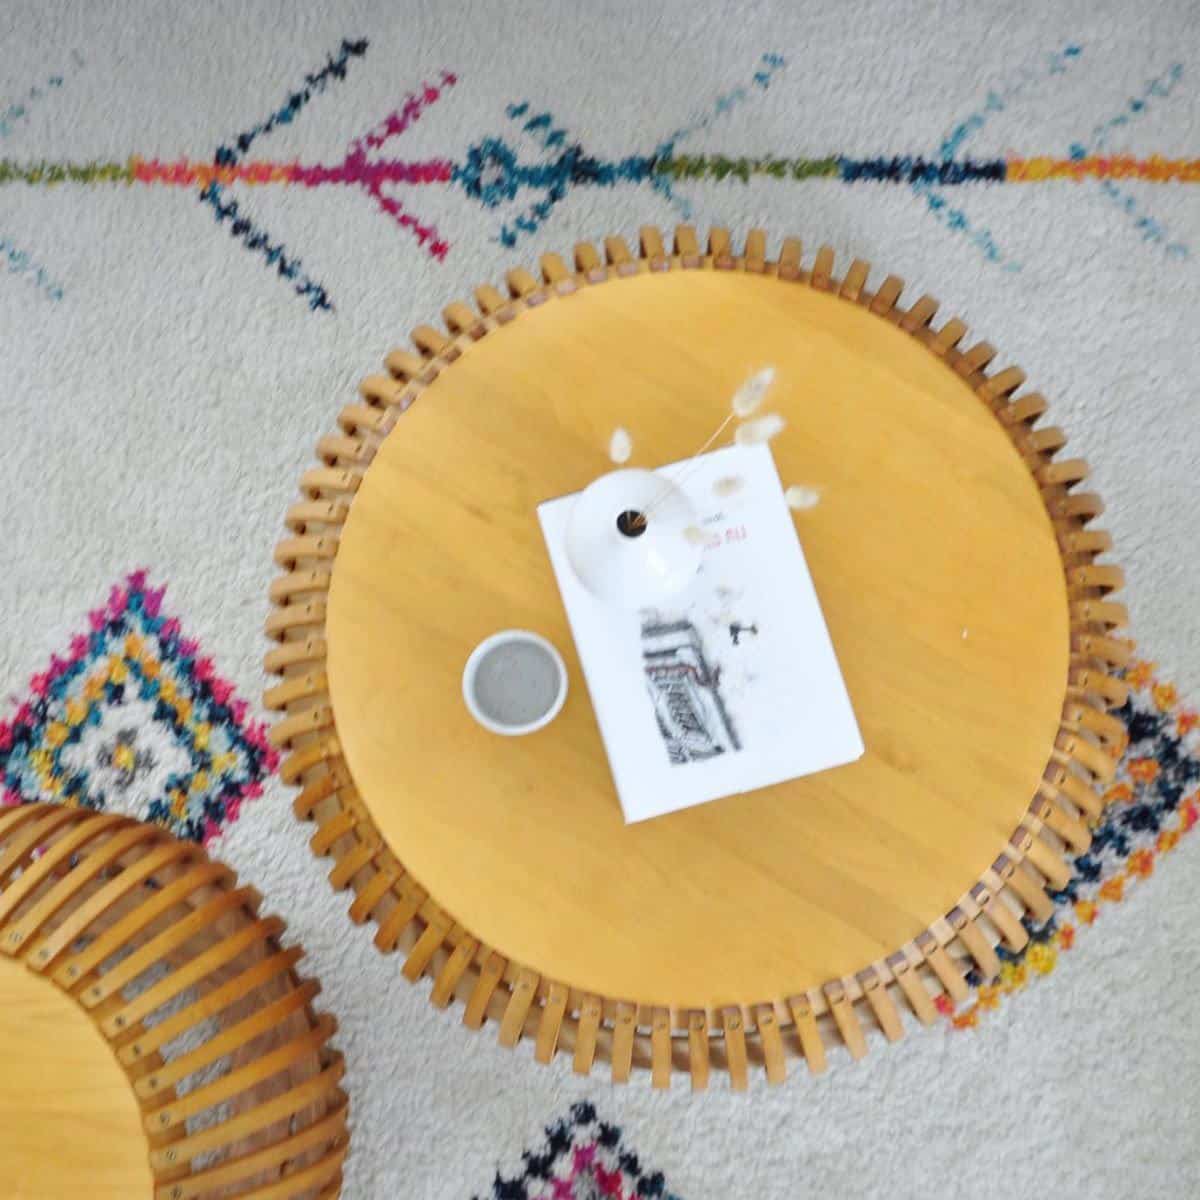 שטיח מיקונוס 01 קרם עם פרנזים | השטיח האדום | עיצוב: מעיין פיינשטיין הום סטיילינג, צילום: מעיין פיינשטיין הום סטיילינג